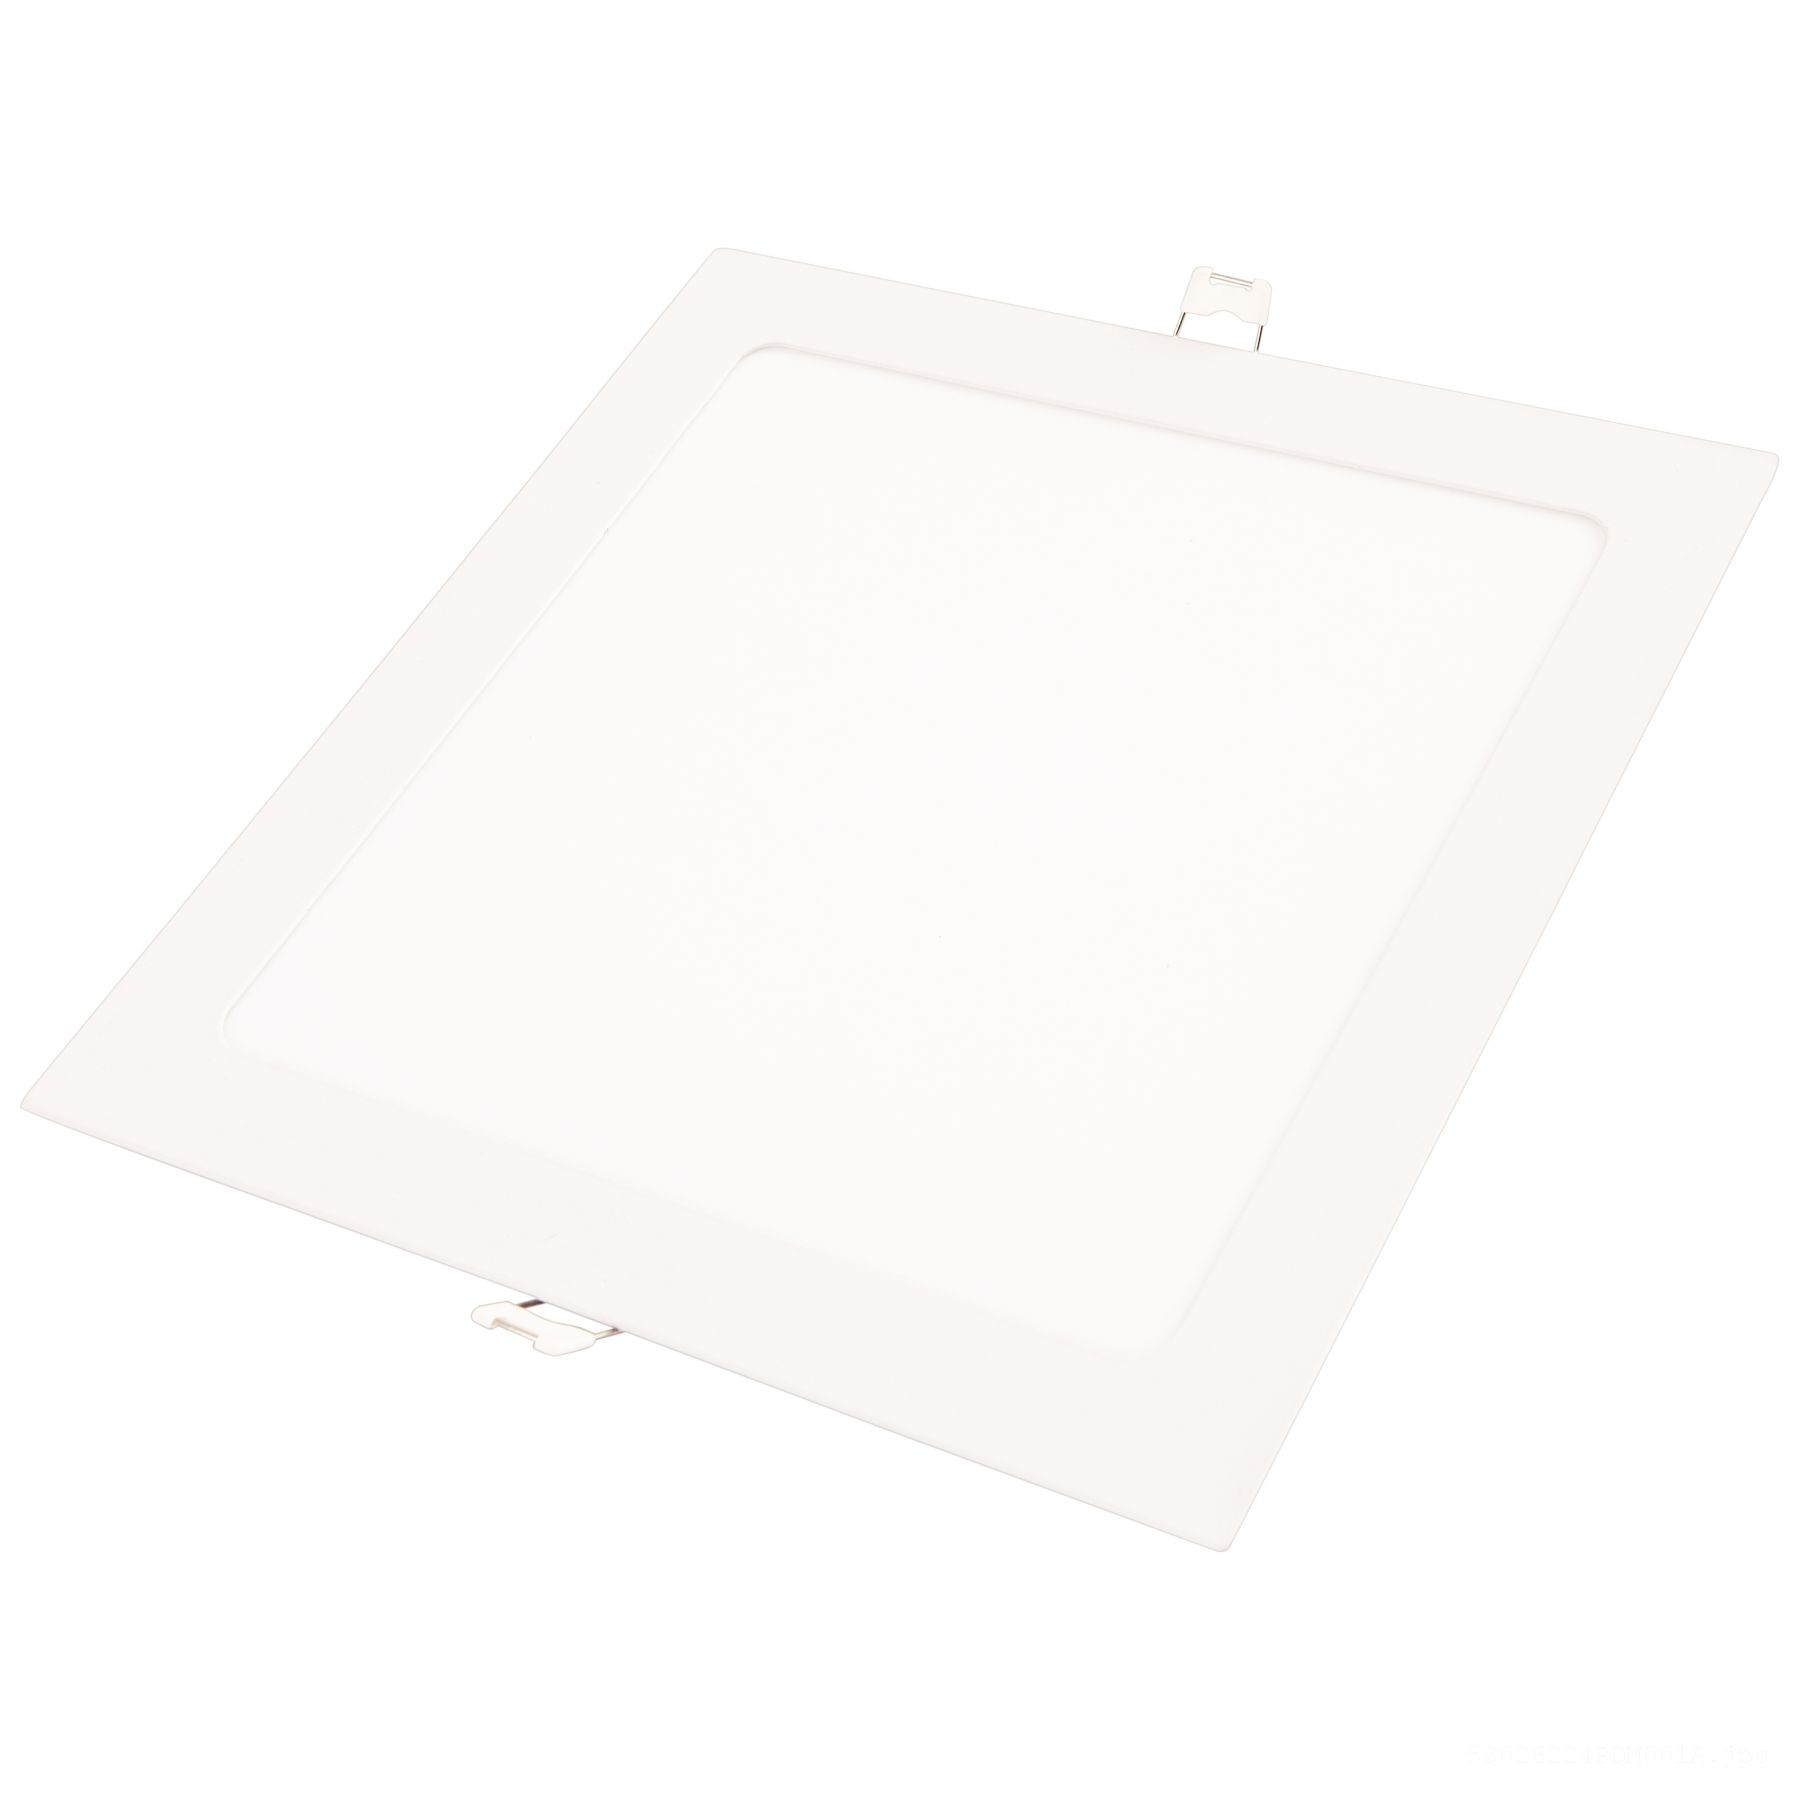 Plafon LED Quadrado de Embutir 800 lm 12 W 6500 K Luz Branca